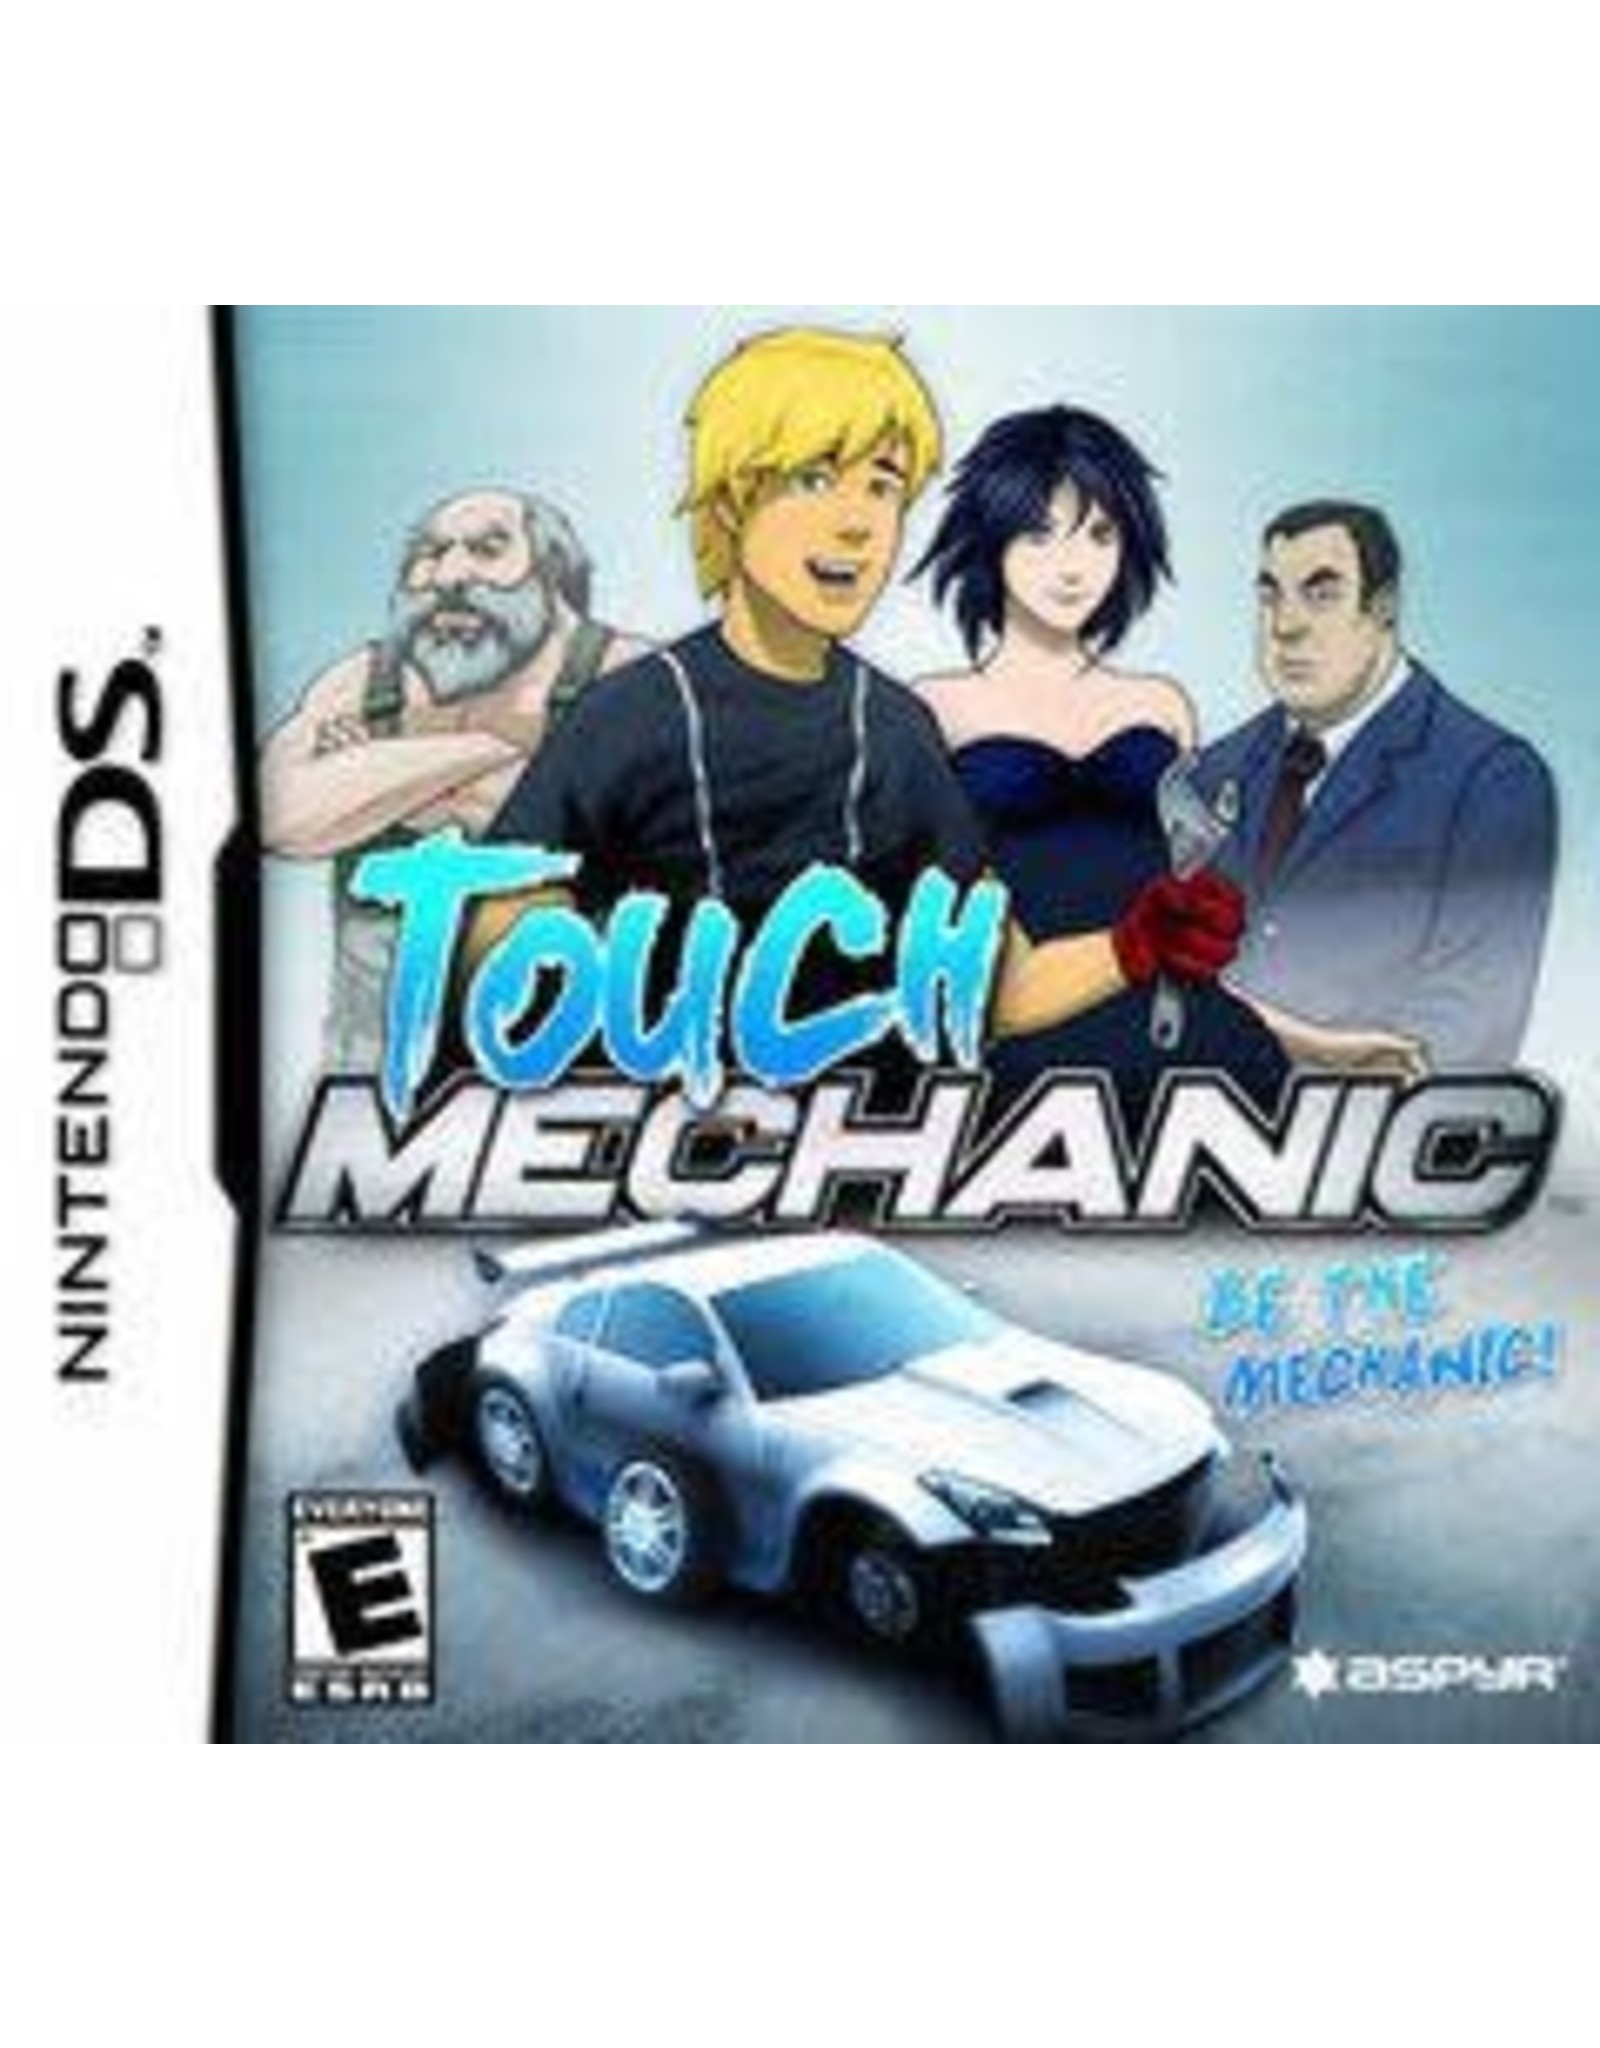 Nintendo DS Touch Mechanic (Brand New)